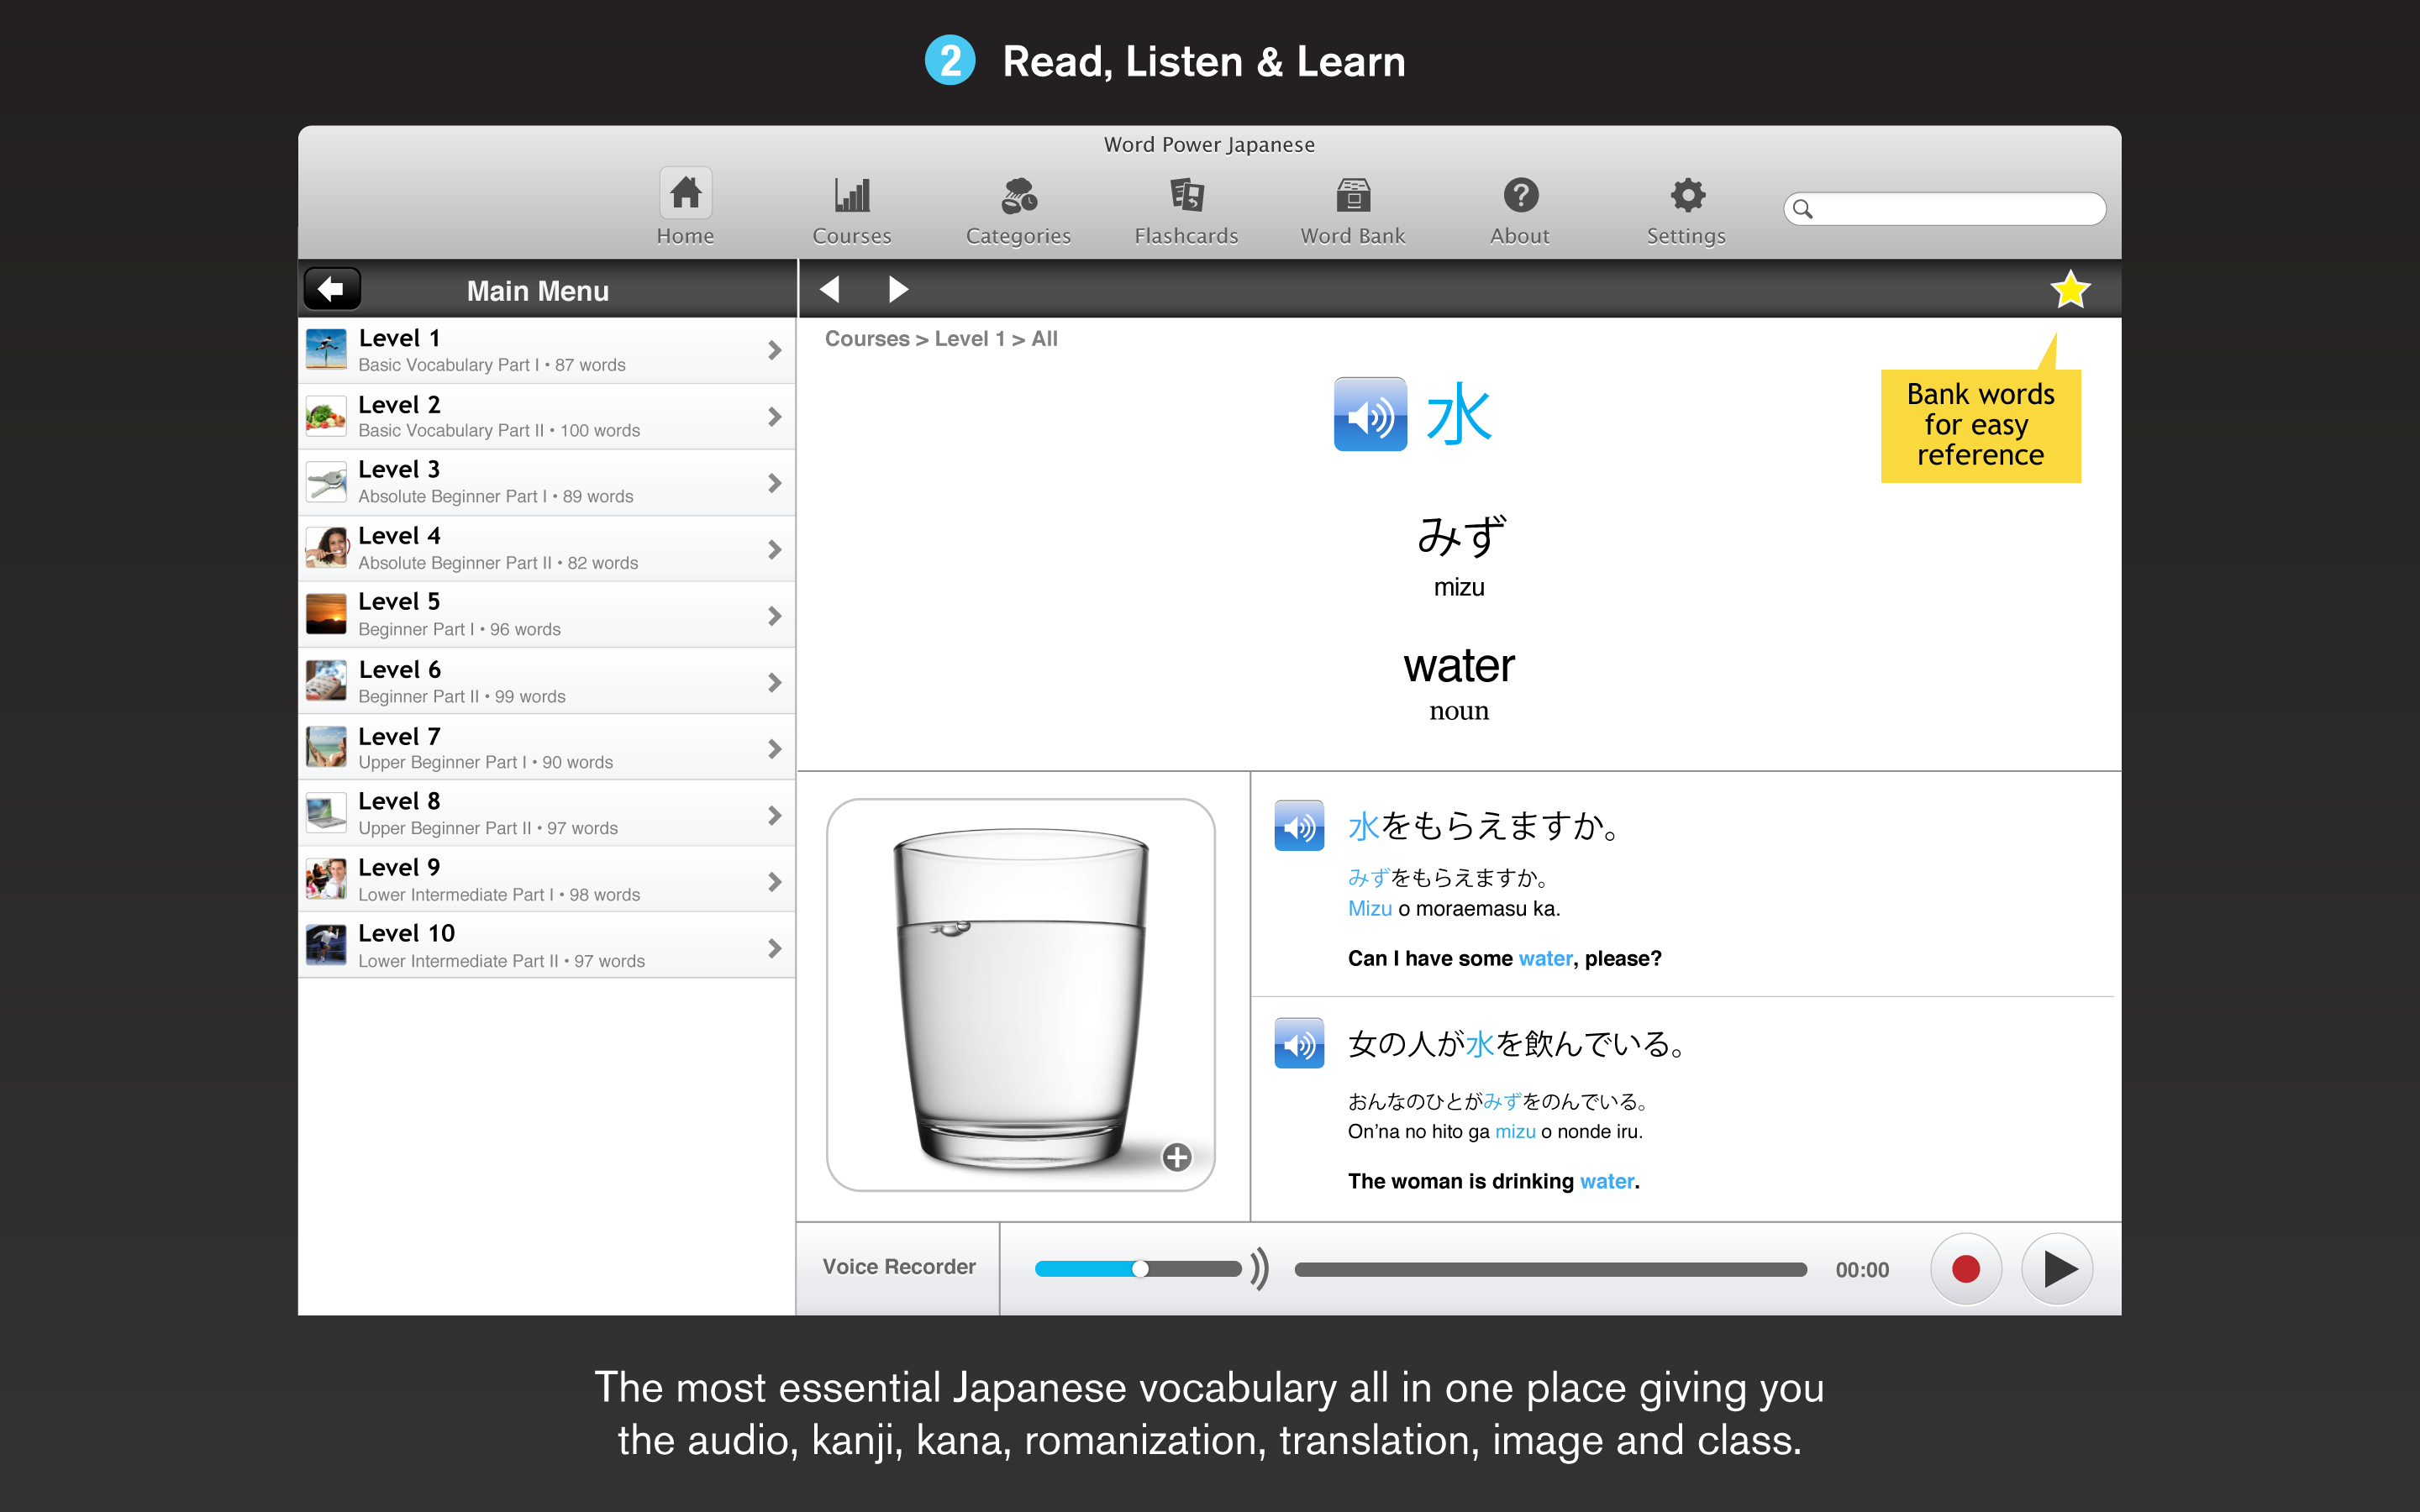 Screenshot 2 - Learn Japanese - Gengo WordPower 